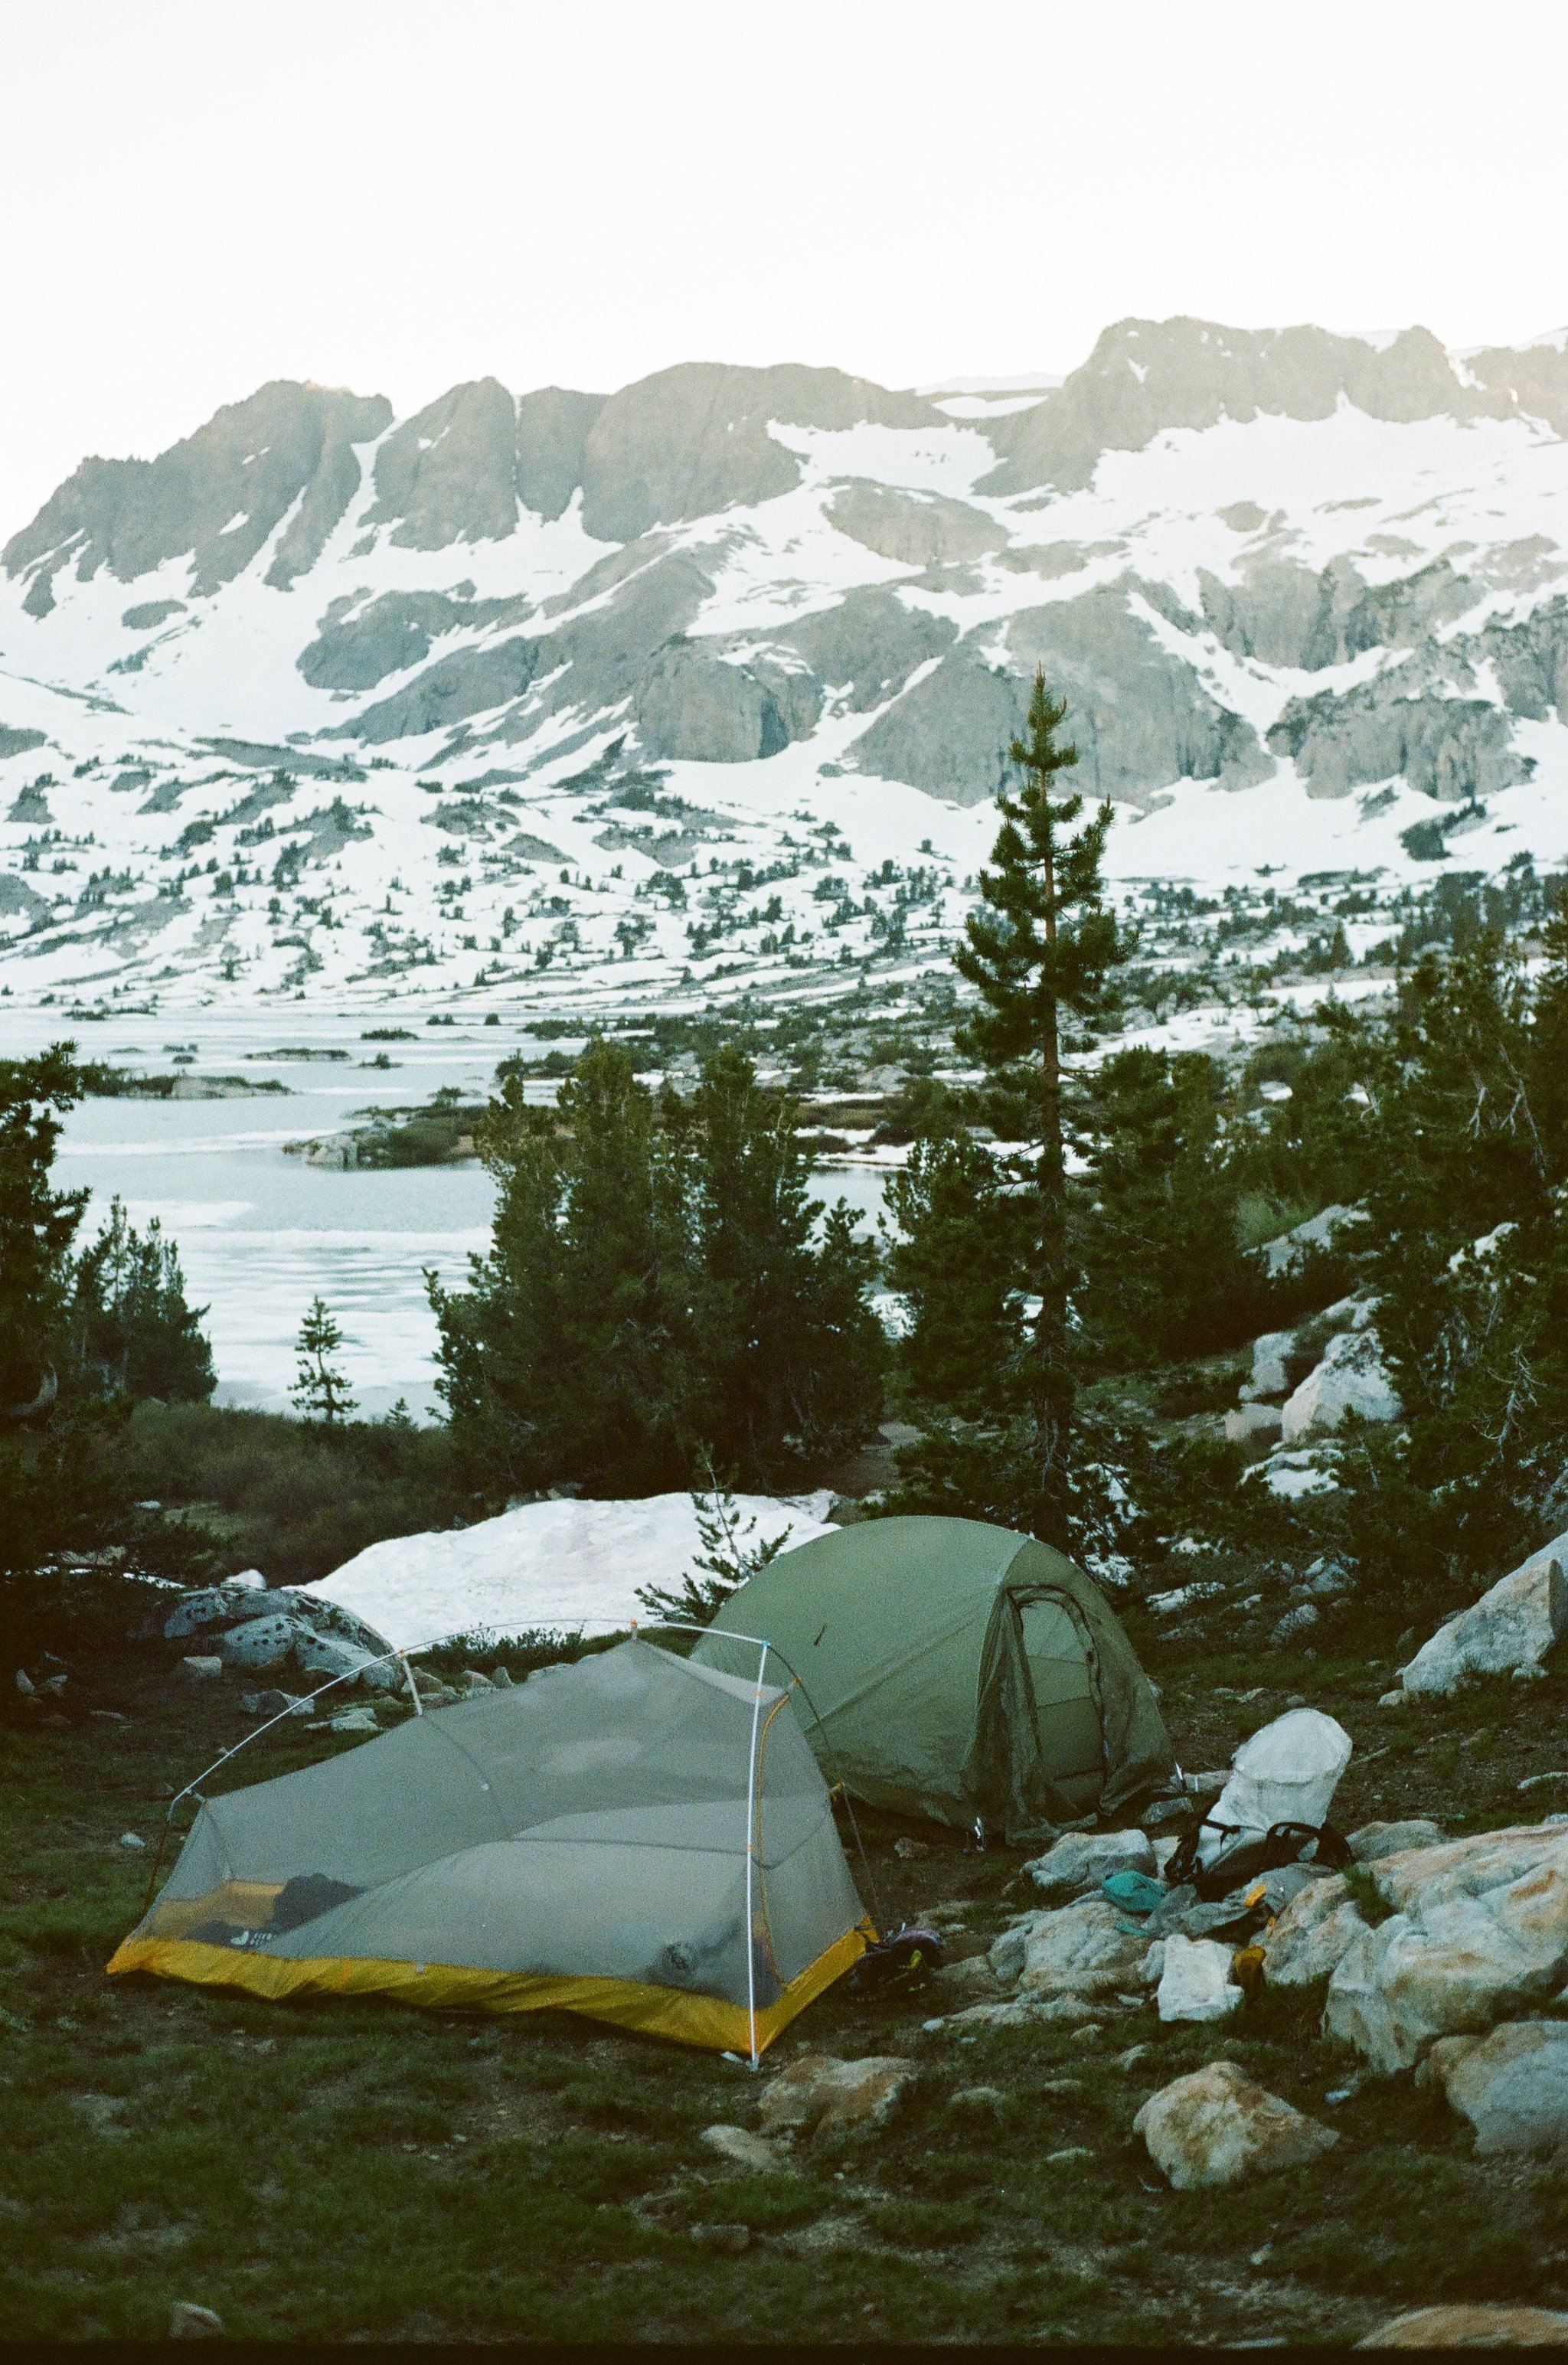  Camp at Thousand Island Lake, 35mm film 